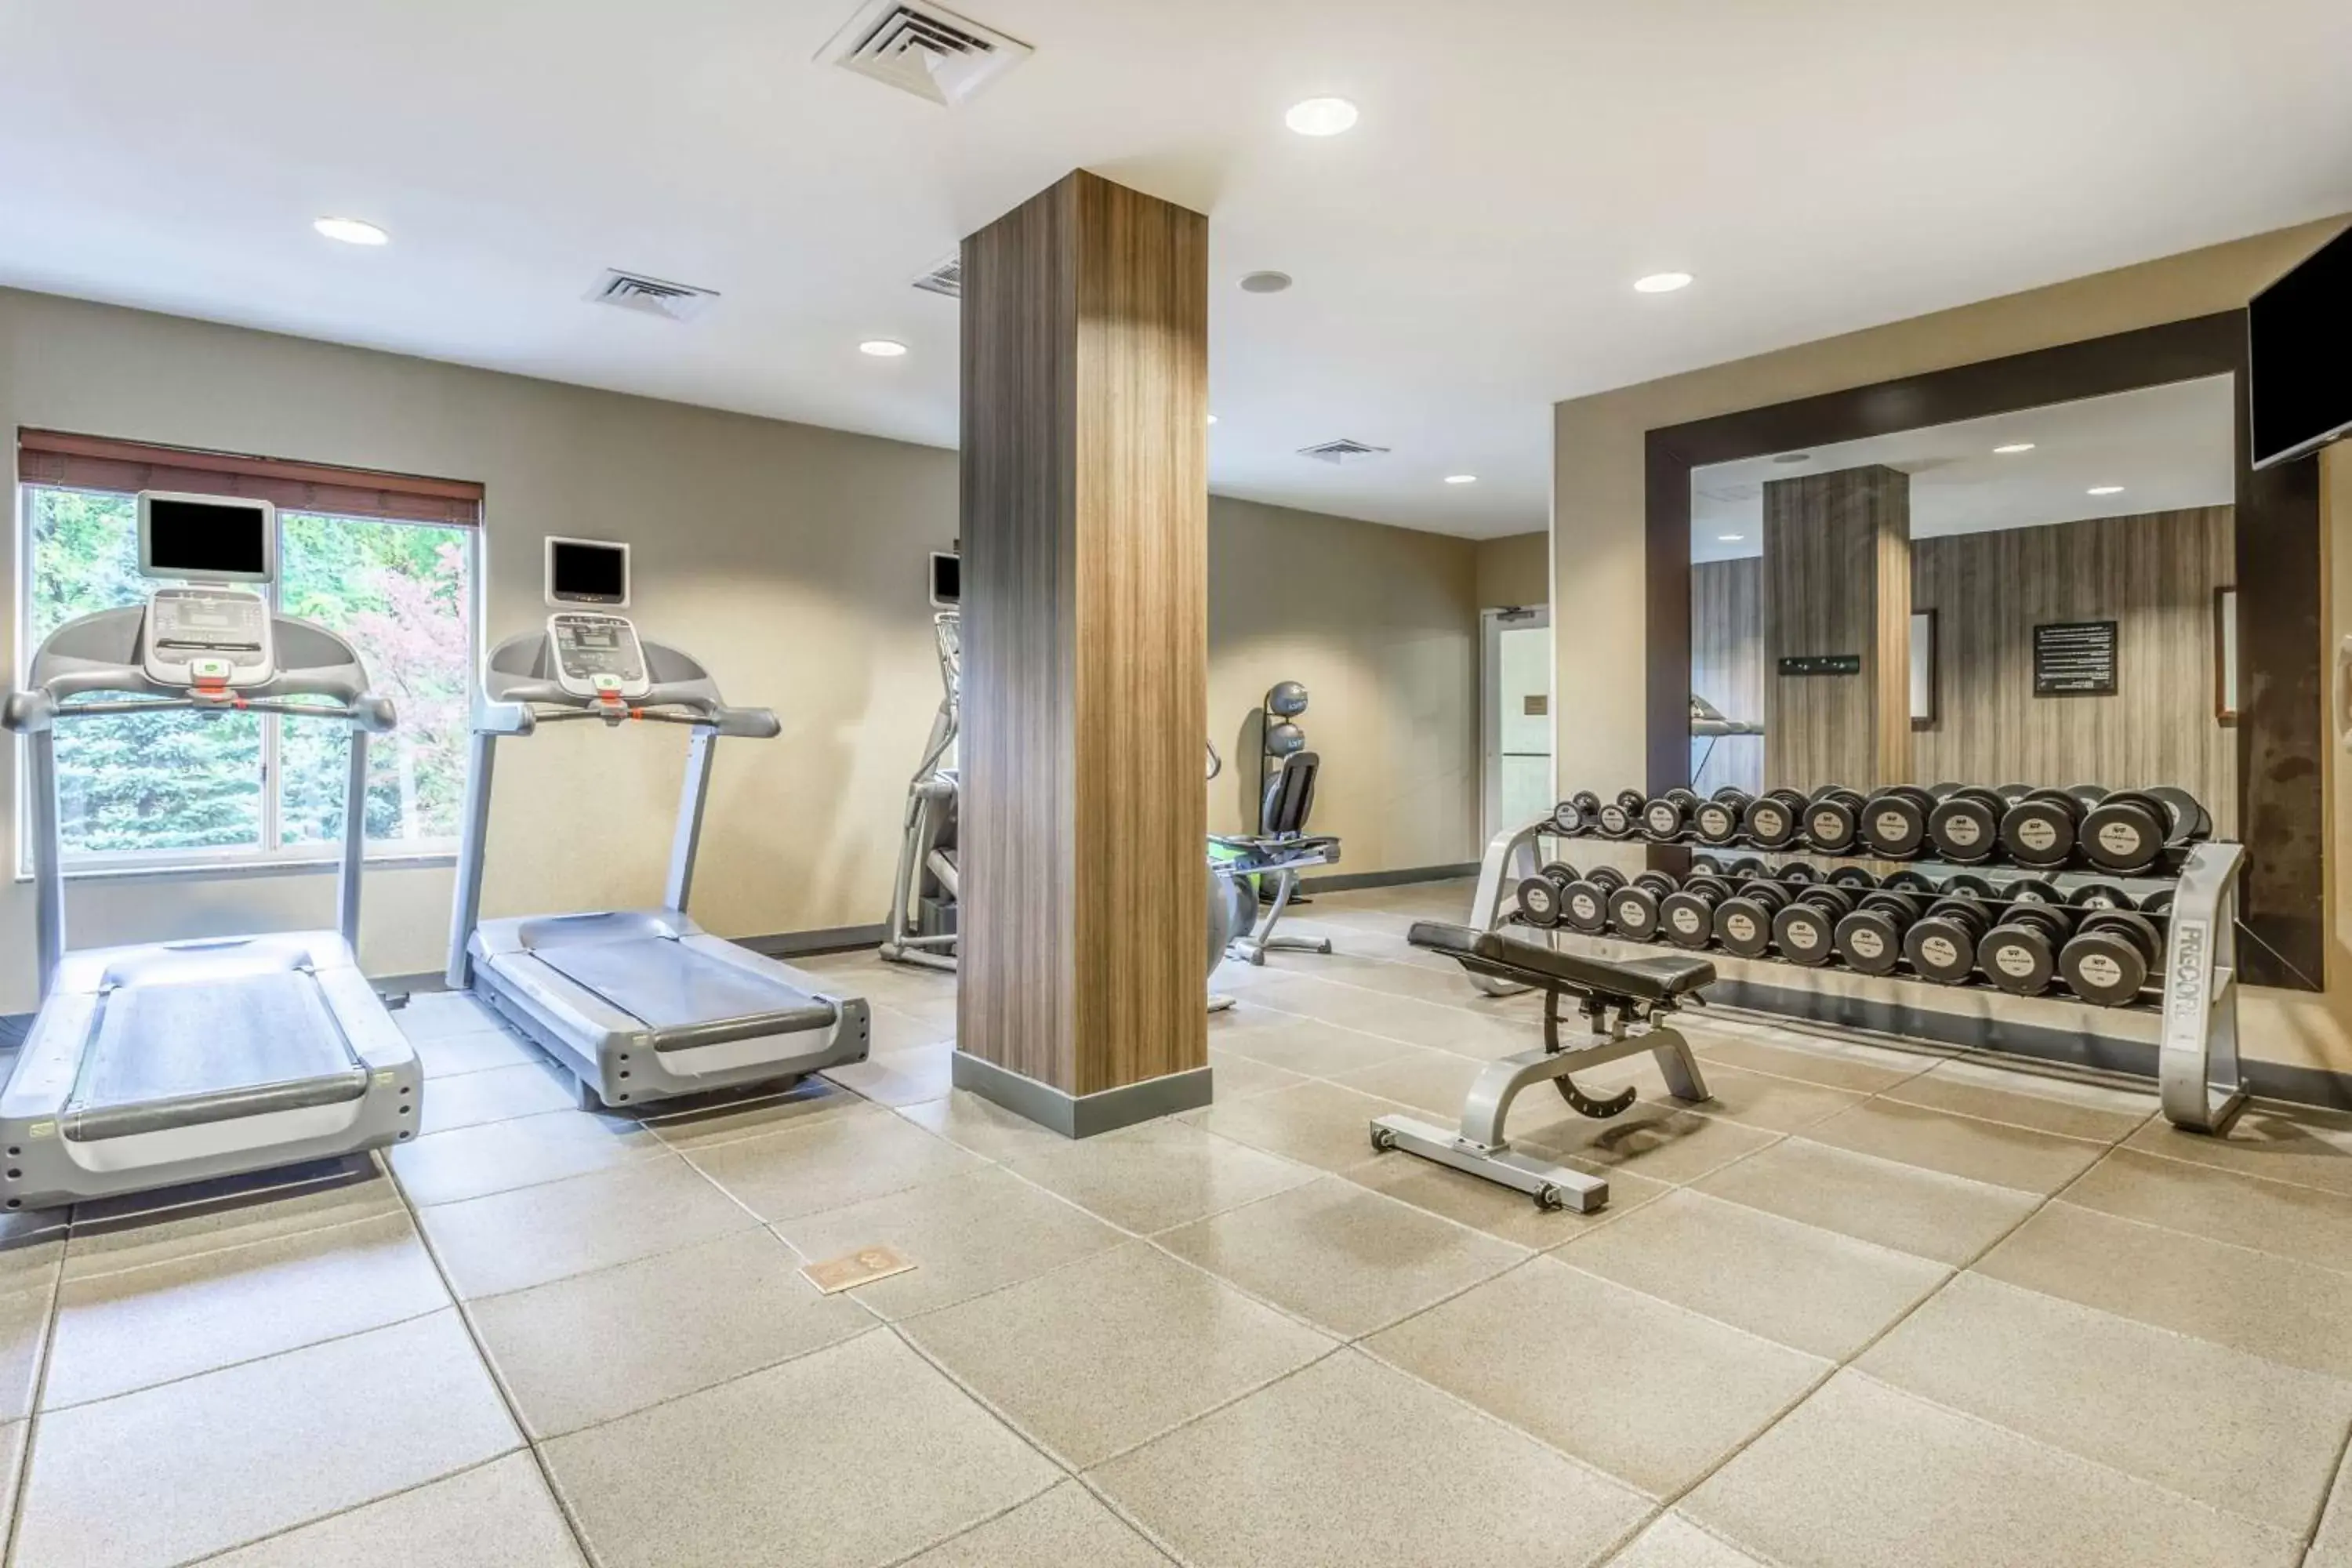 Fitness centre/facilities, Fitness Center/Facilities in Hilton Garden Inn Albany-SUNY Area